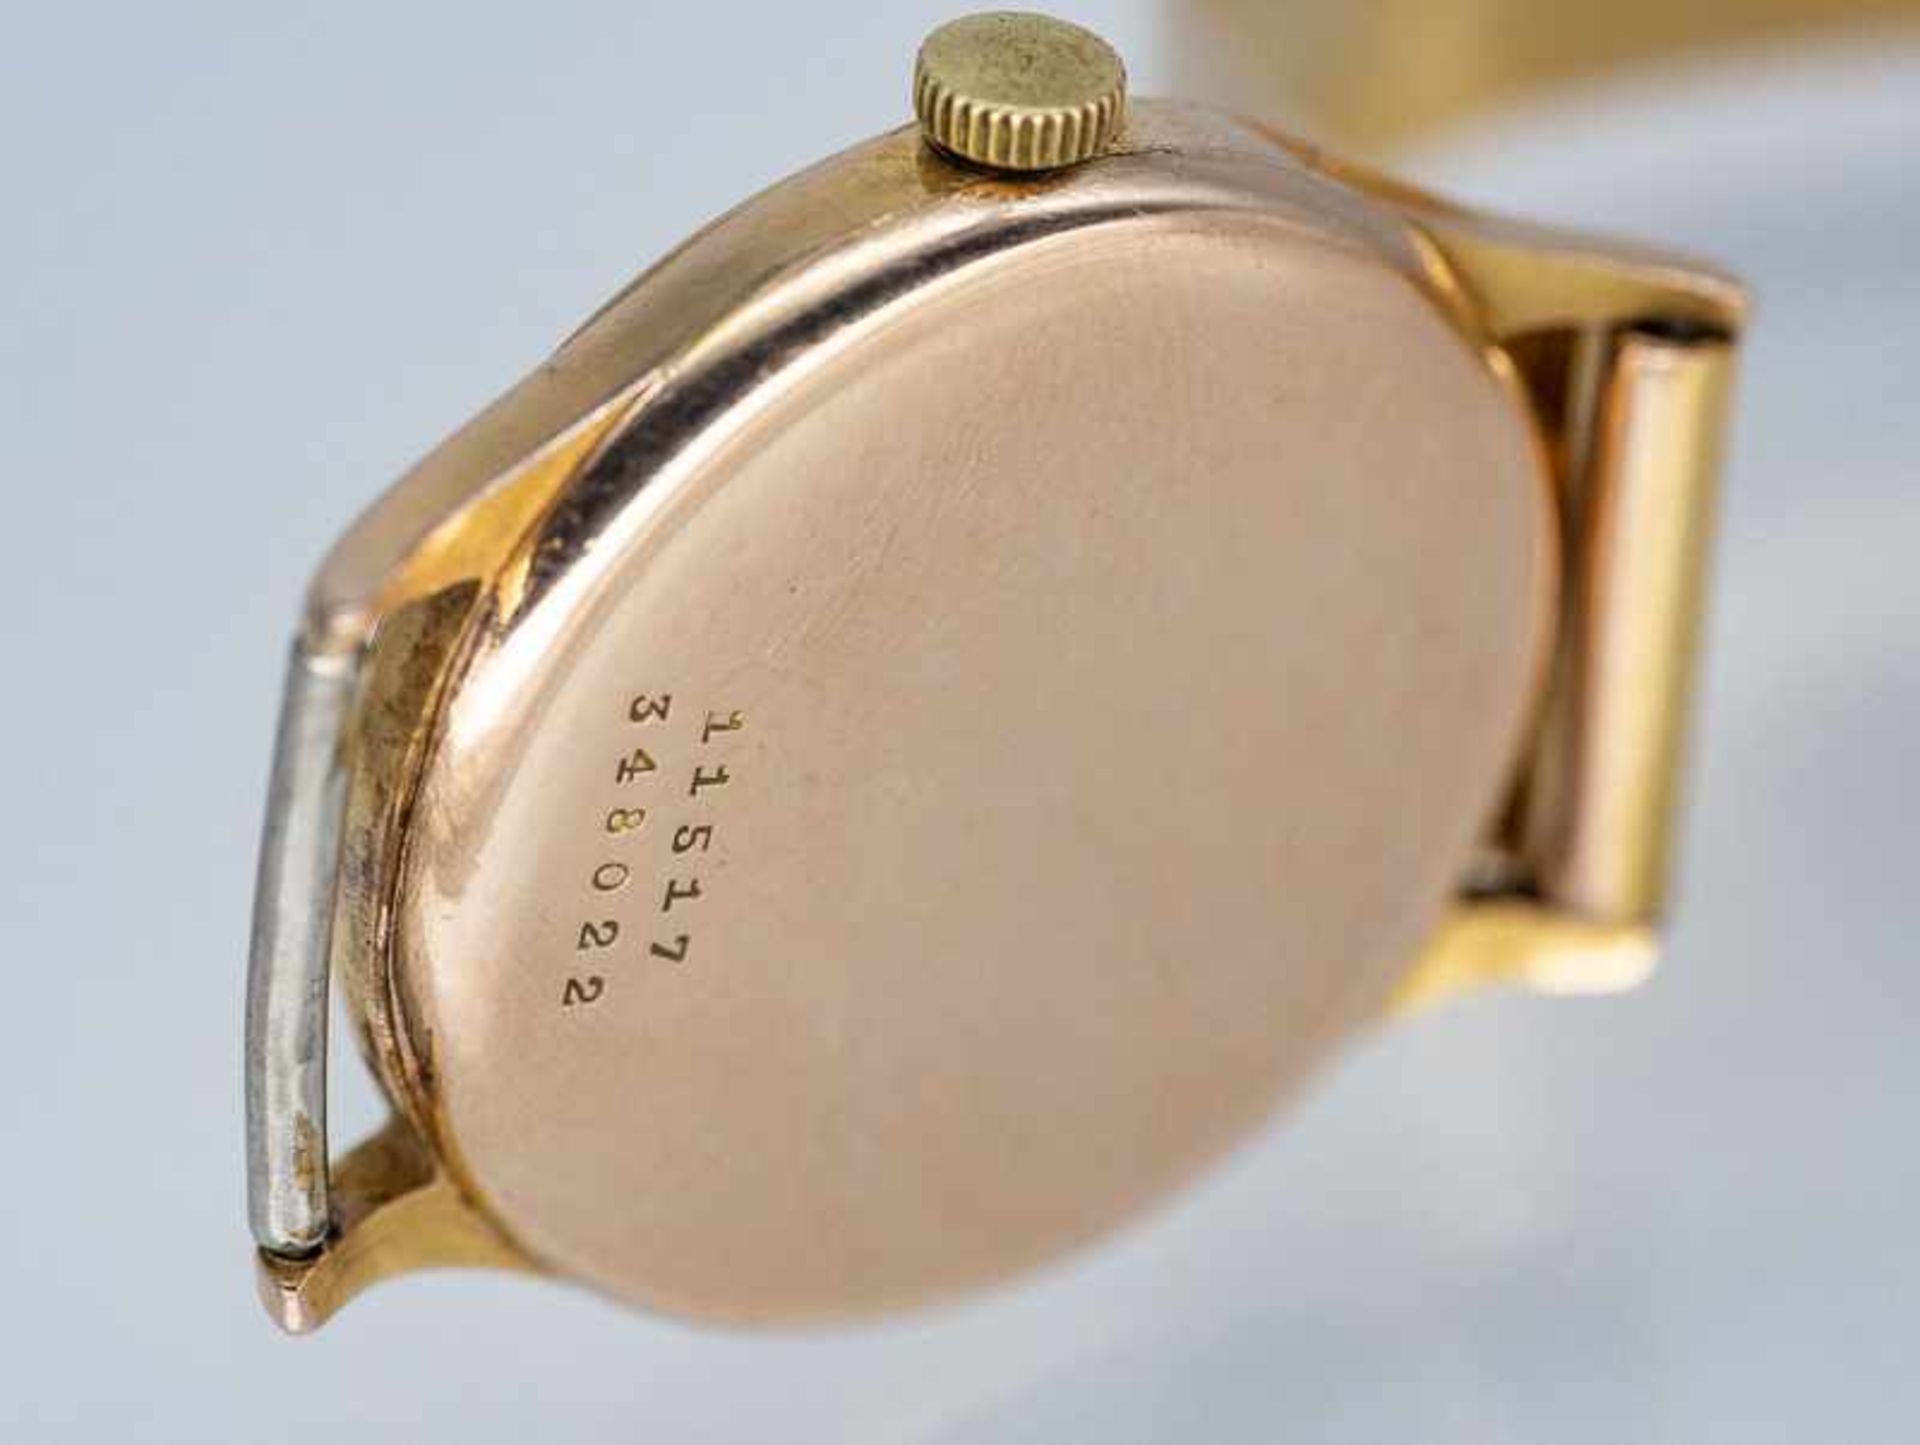 Armbanduhr und Spangenarmreif, bezeichnet Fokker, 20. Jh. - Image 2 of 3